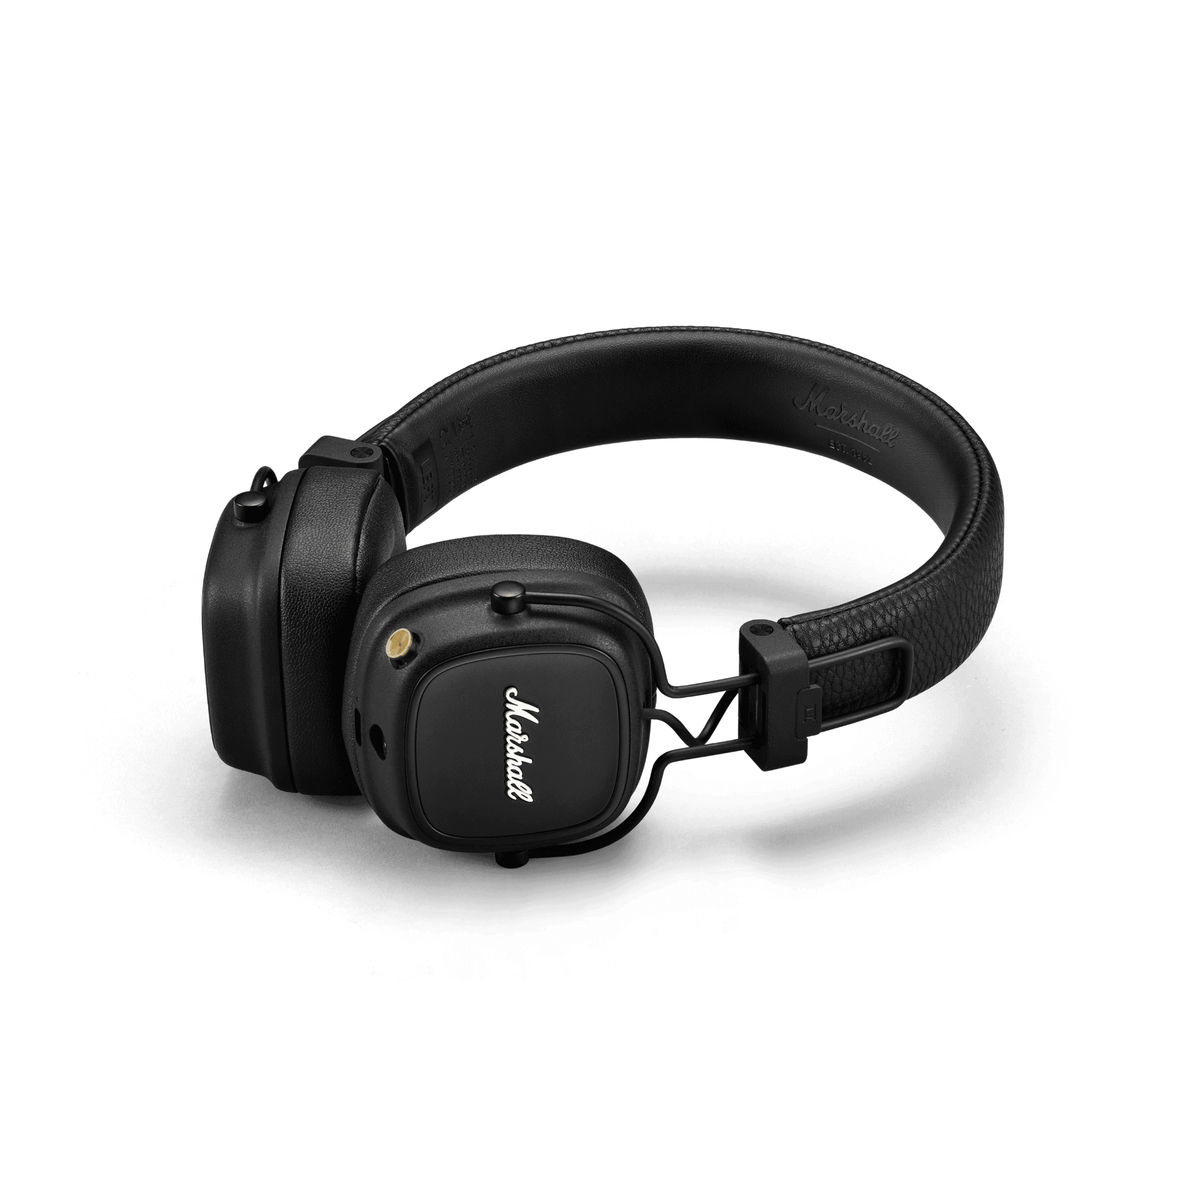 Marshall Over-ear Wireless Headphone, Black, MAJOR-IV